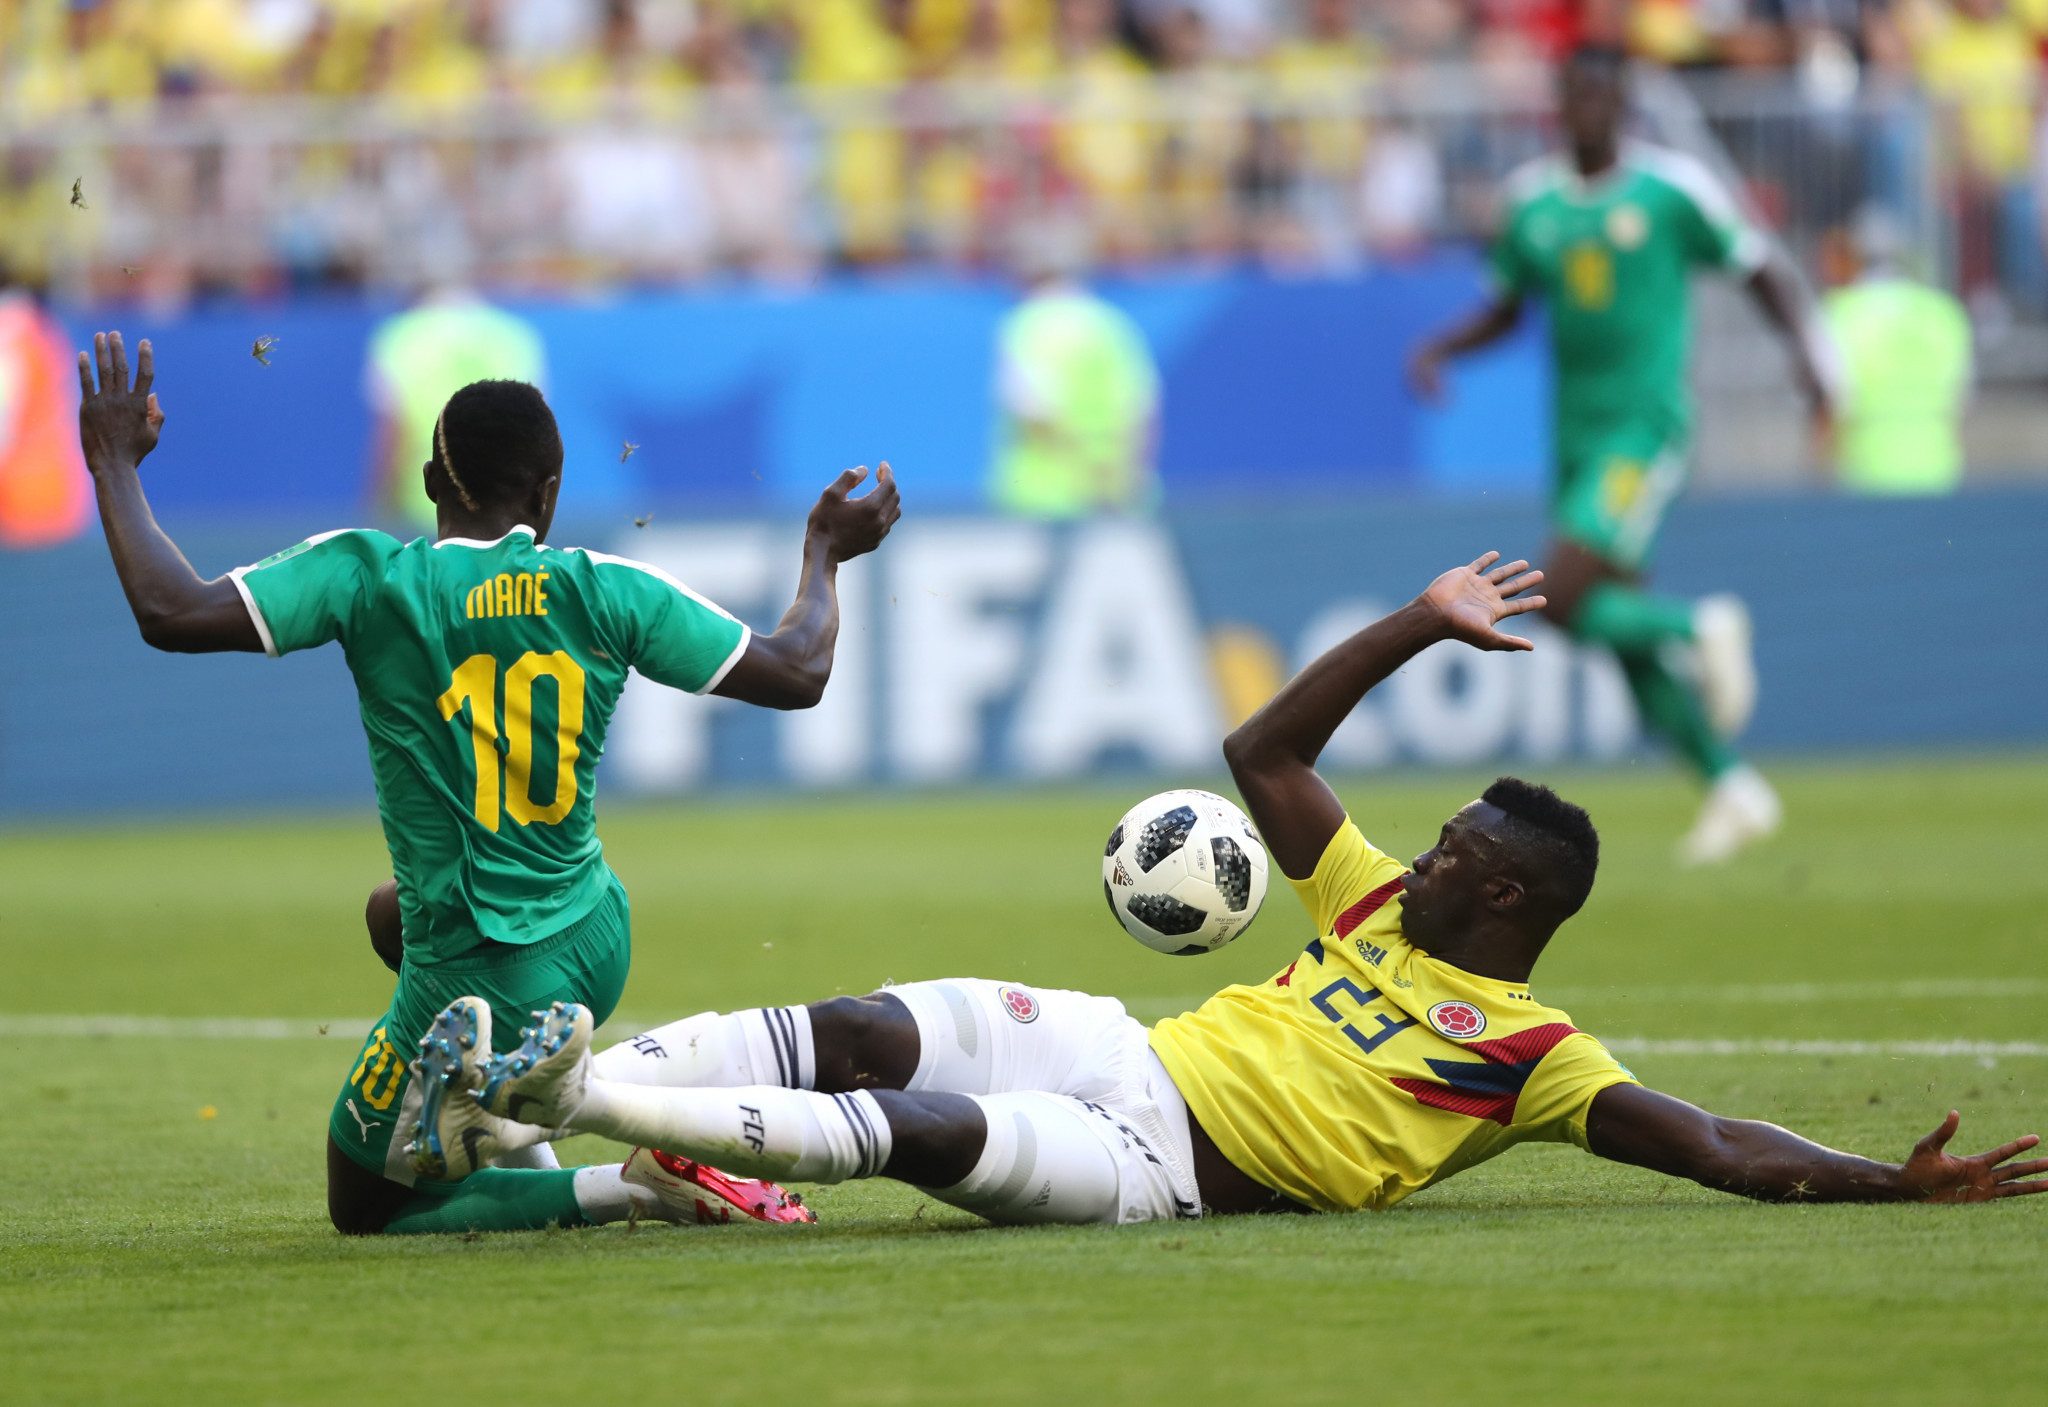 A brilliant tackle by Davinson Sanchez denies Sadio Mane ©Getty Images